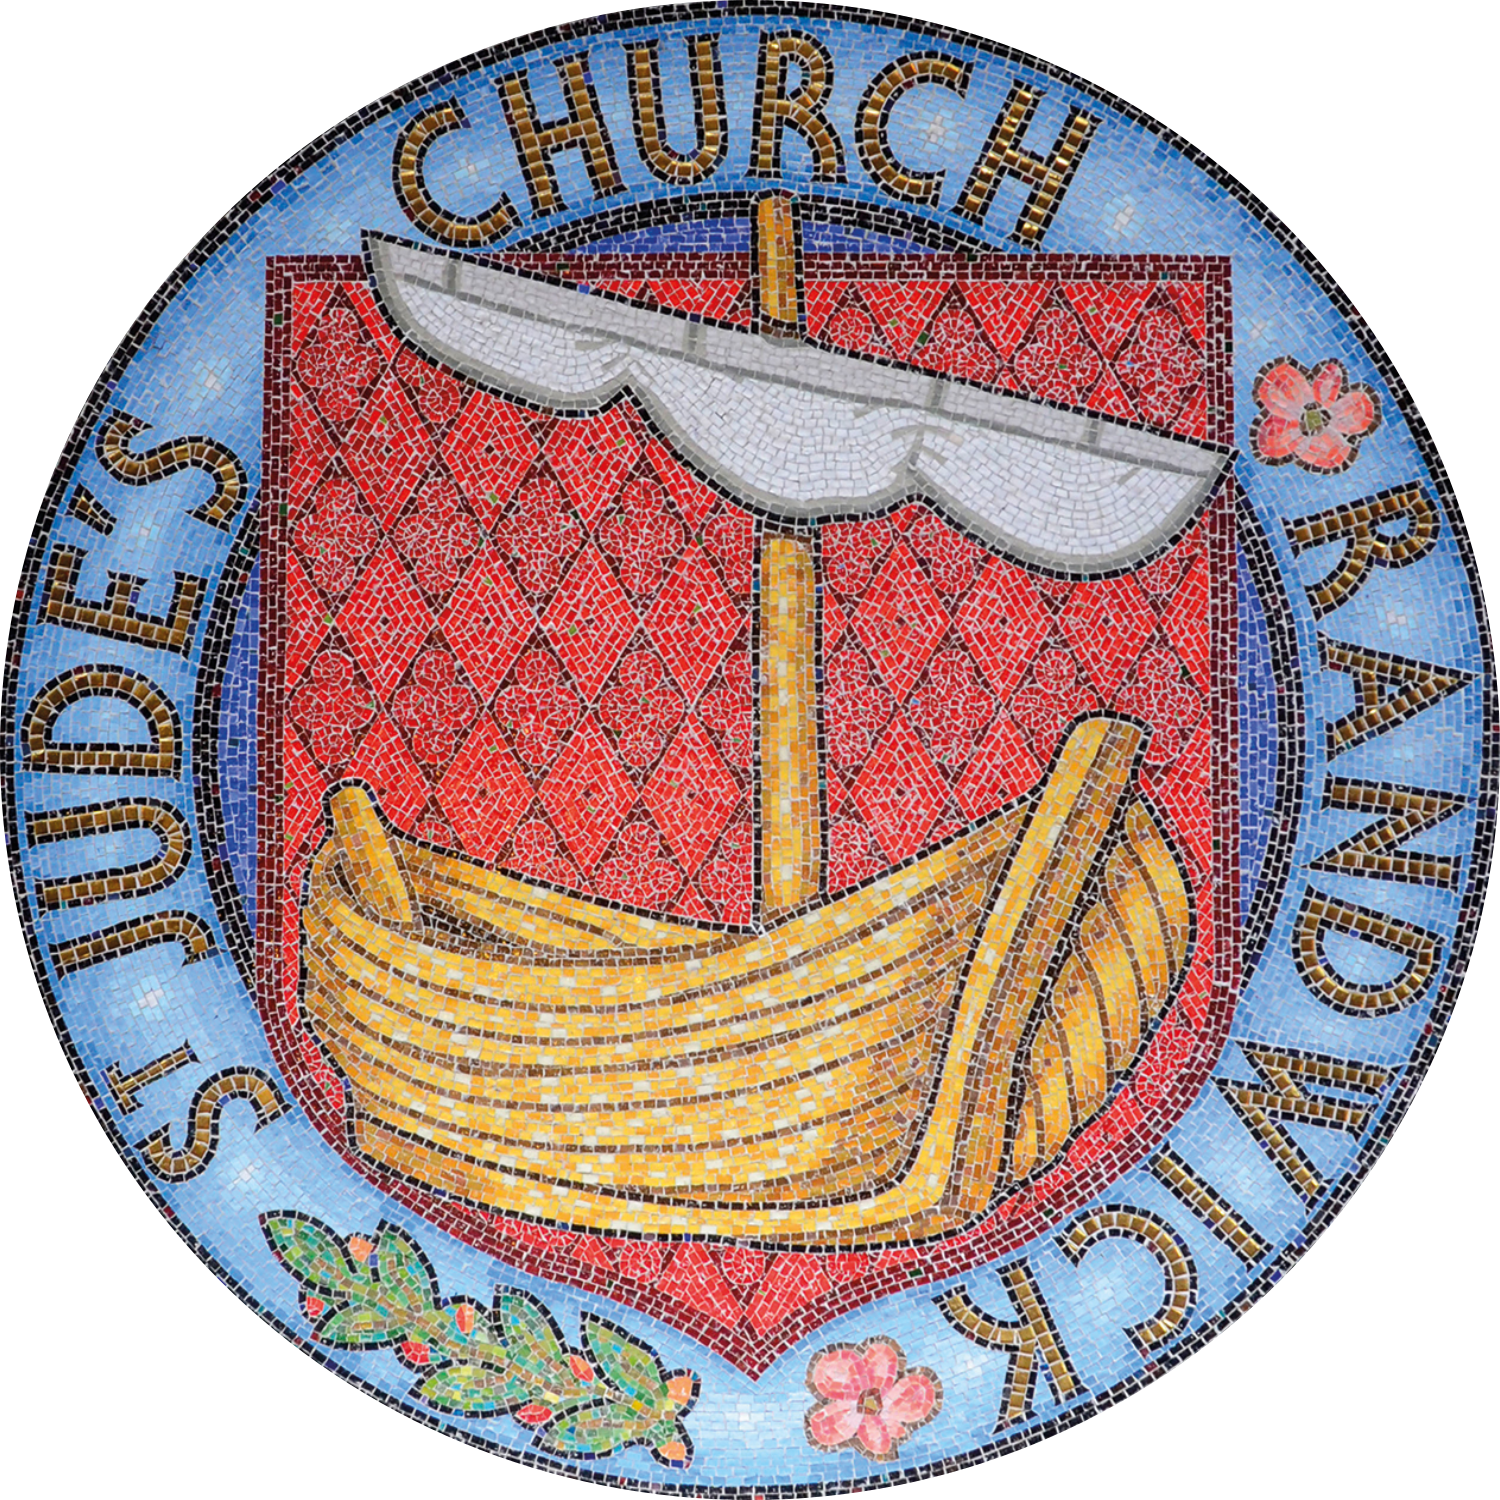 Sermons from St Jude's Anglican Church Randwick